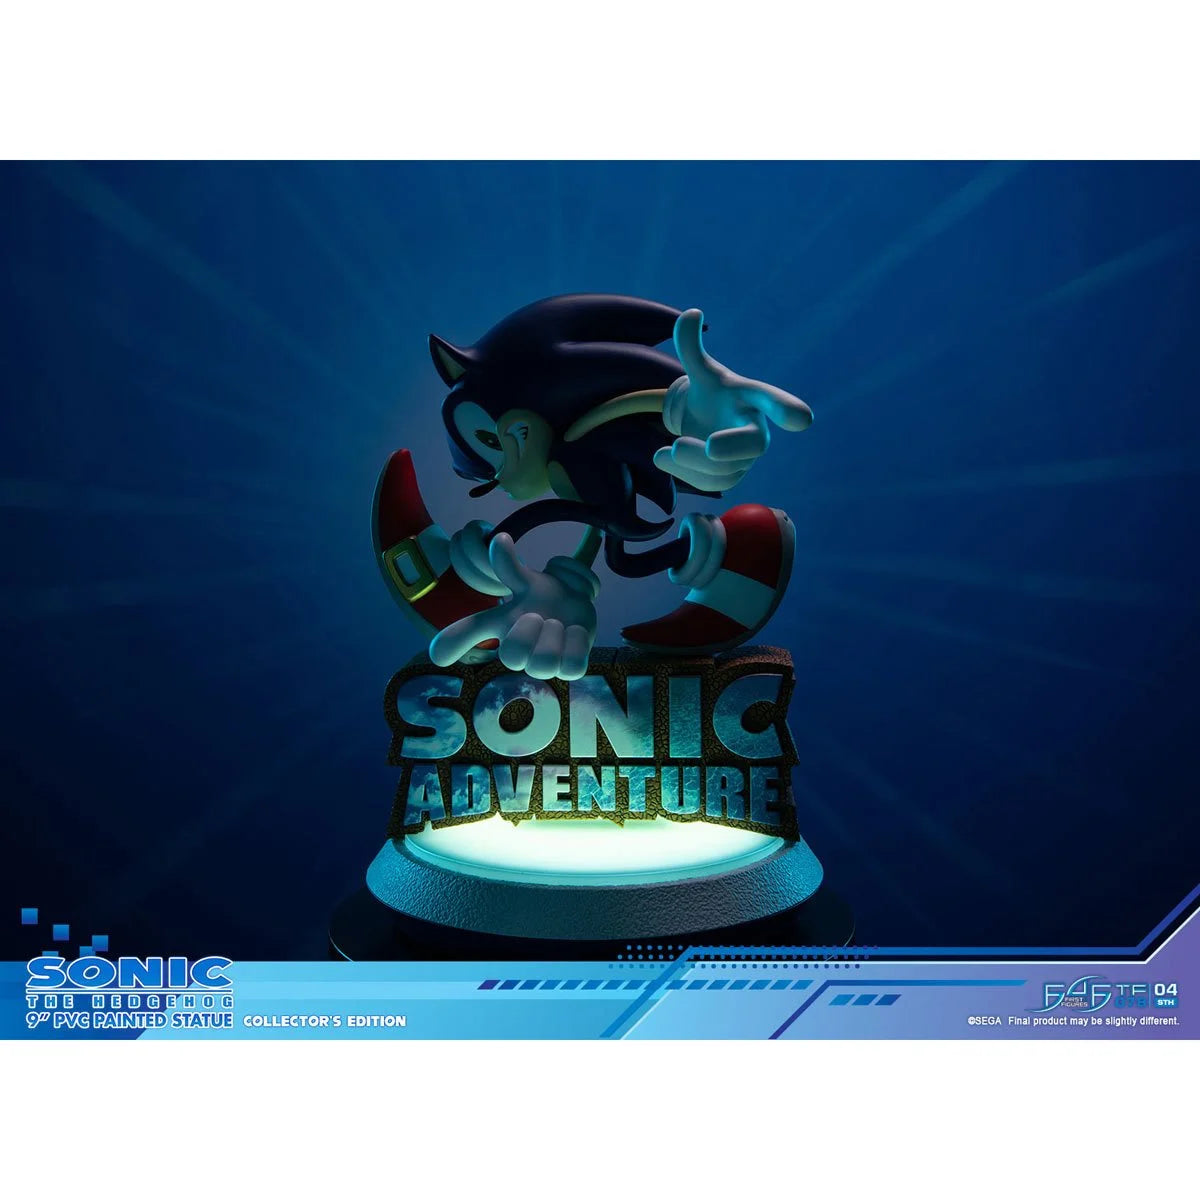 Figurine Sonic the Hedgehog Collector Edition, Figurine Sonic Adventure